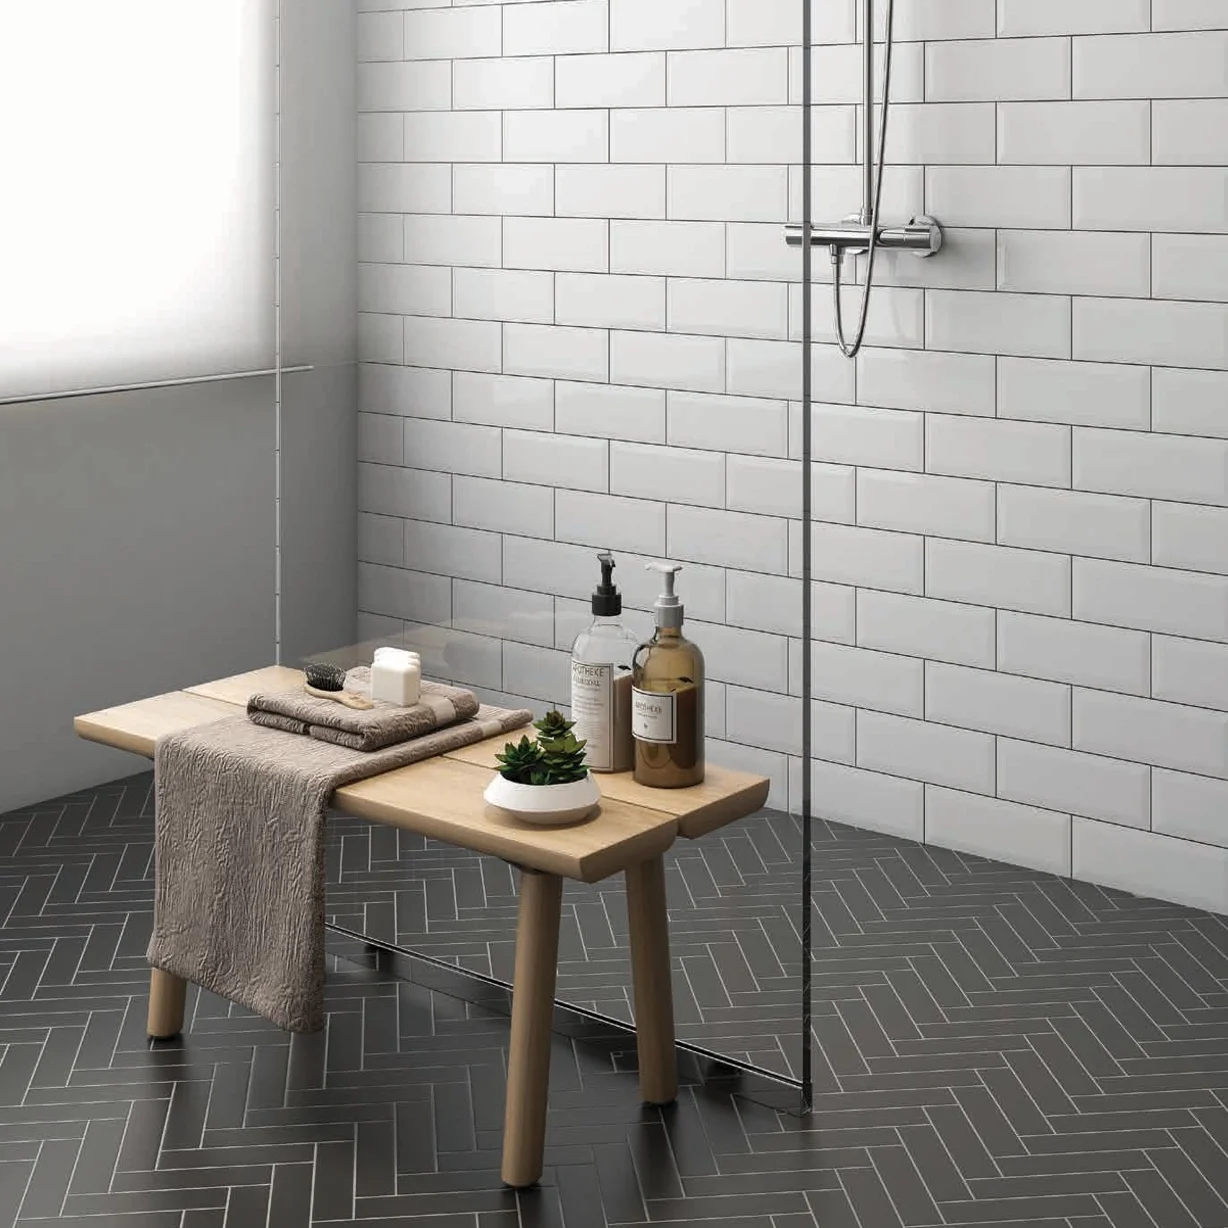 Installation of 2x8 Herringbone Mosaic Tile in Black Matte Color in Shower Floor